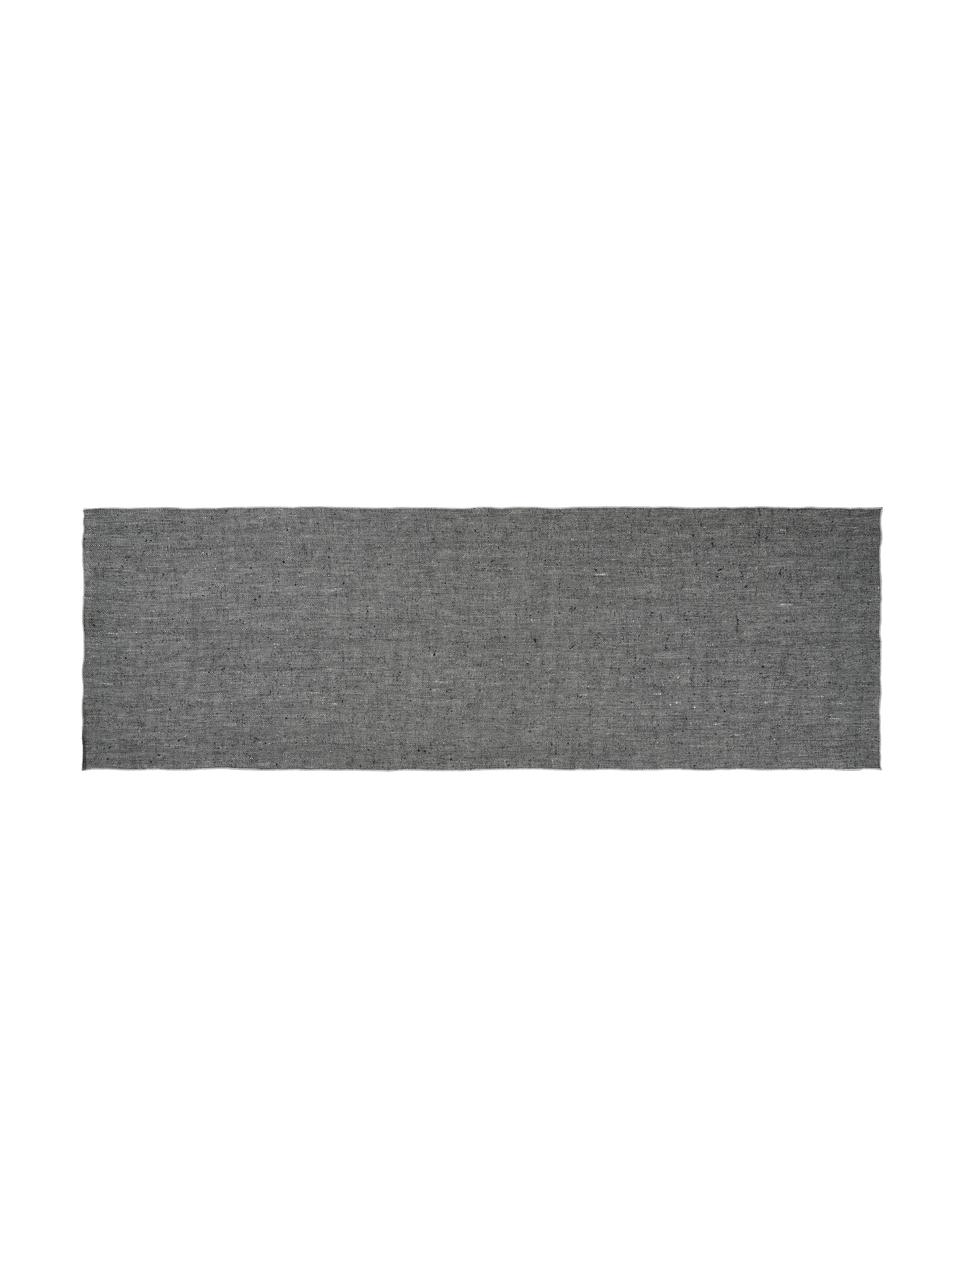 Camino de mesa de lino Audra, 100% lino, Negro, gris, An 46 x L 147 cm